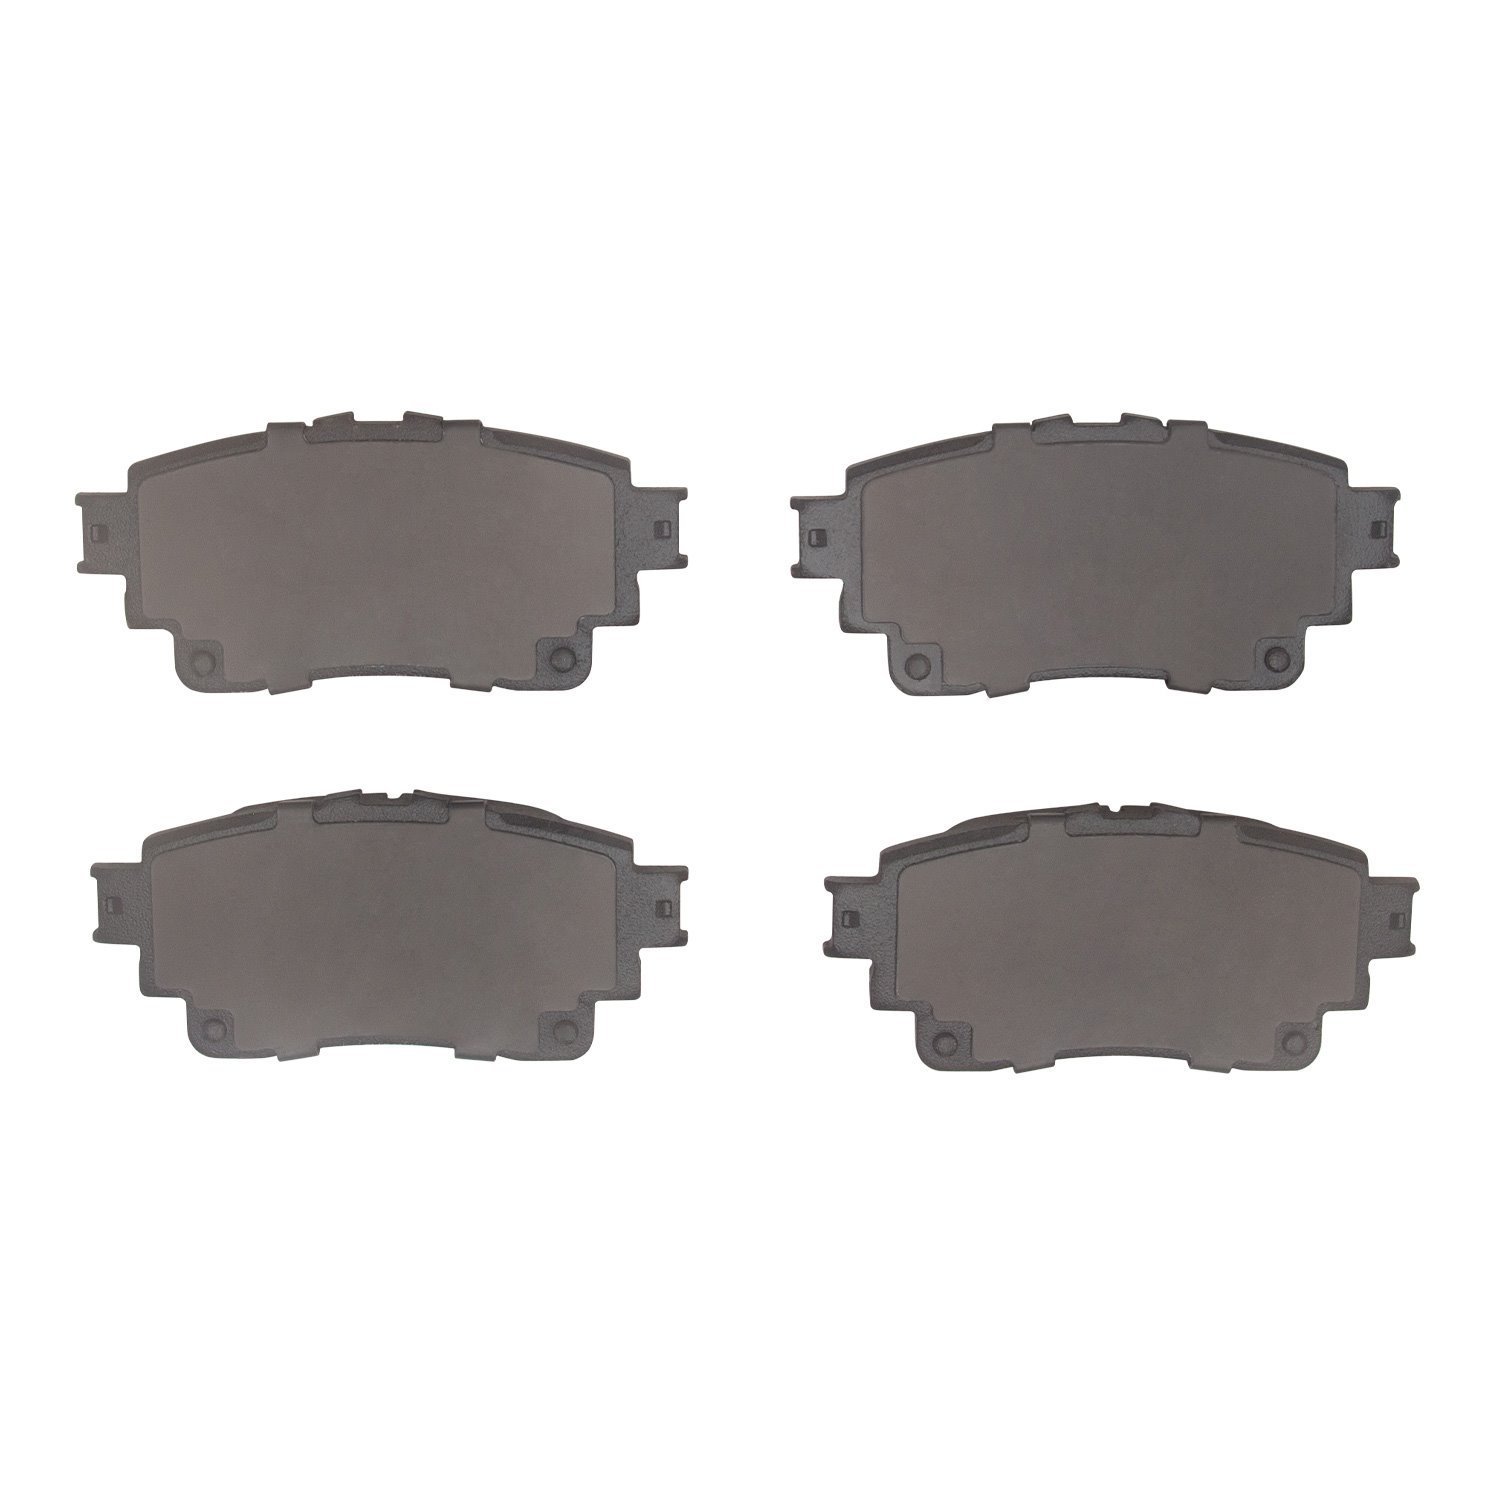 1551-2183-00 5000 Advanced Ceramic Brake Pads, Fits Select Lexus/Toyota/Scion, Position: Rear